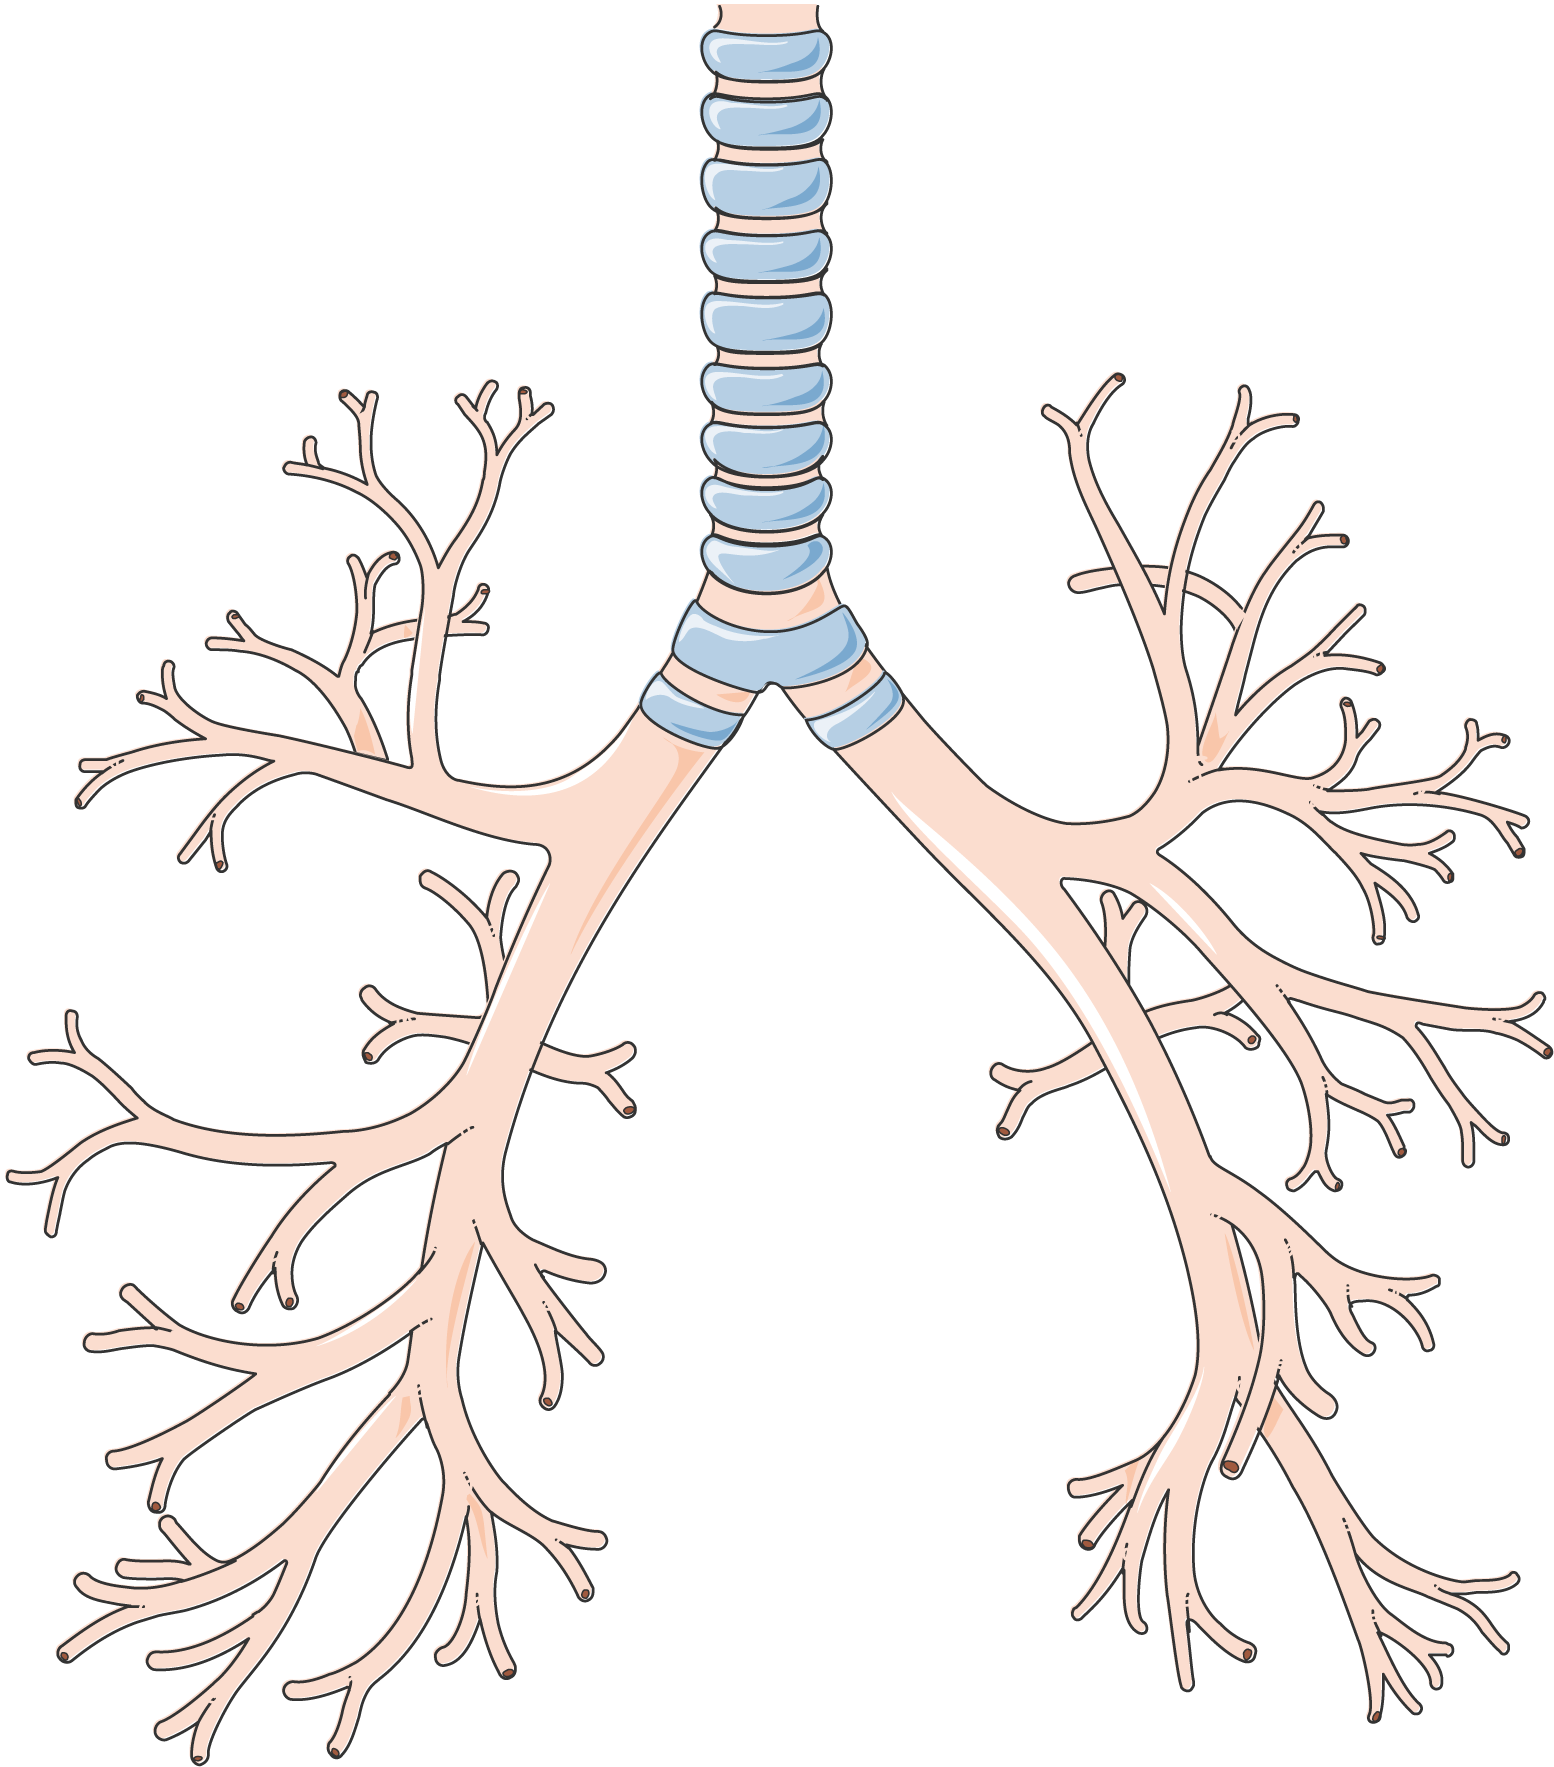 bronchial tree anatomy labeled